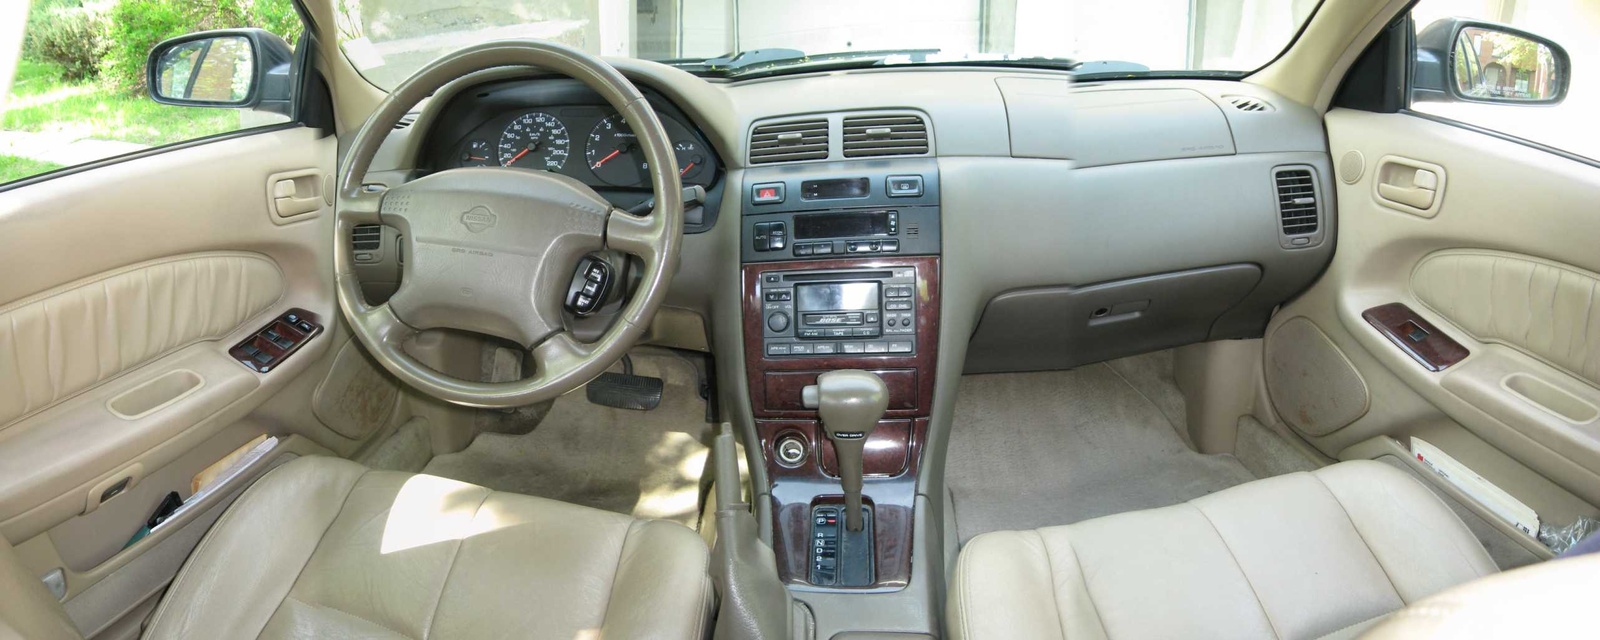 1998 Nissan maxima interior trim kit #4